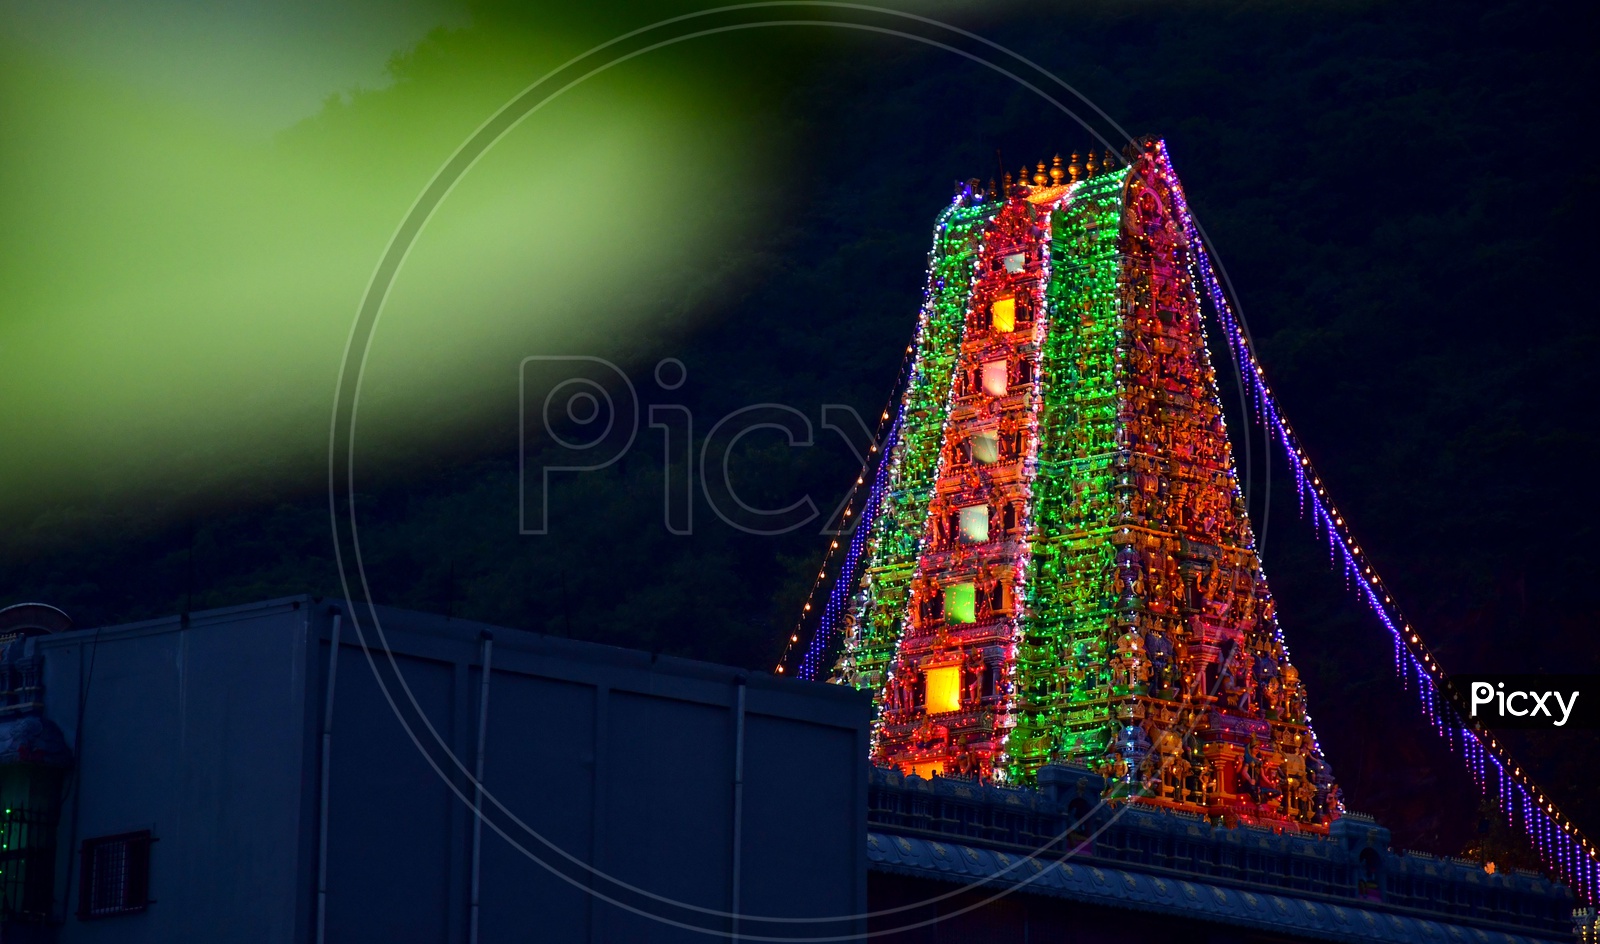 View of Hindu Temple with lights during Dussehra in Vijayawada